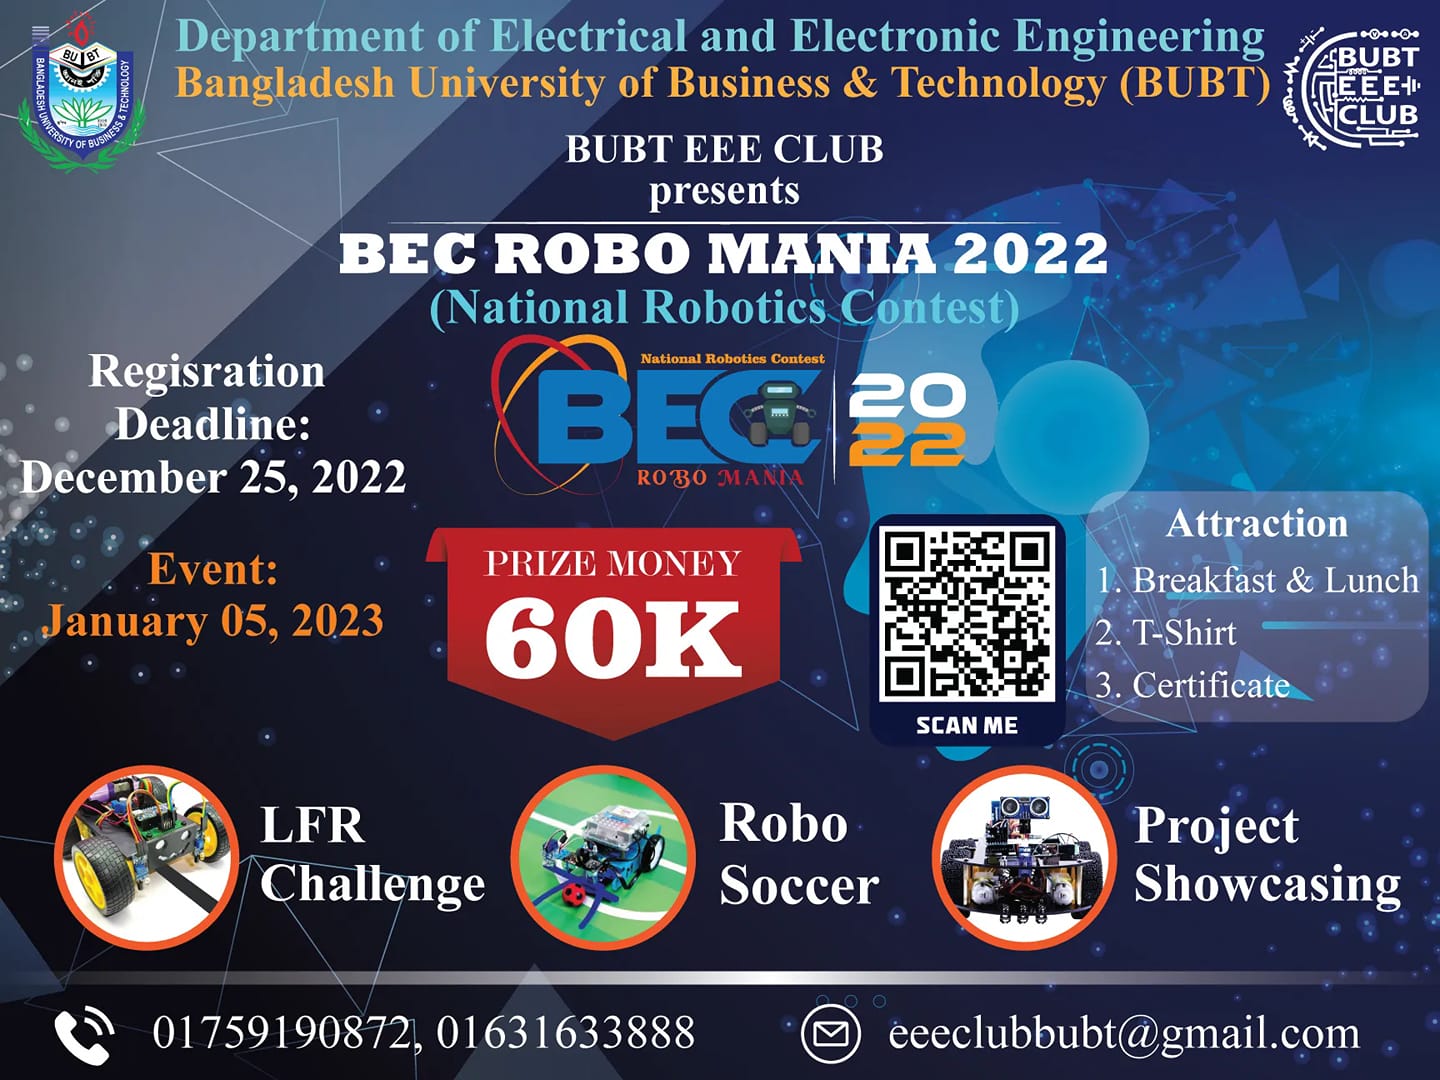 BEC ROBO MANIA 2022,National Robotics Contest organized by BUBT EEE CLUB